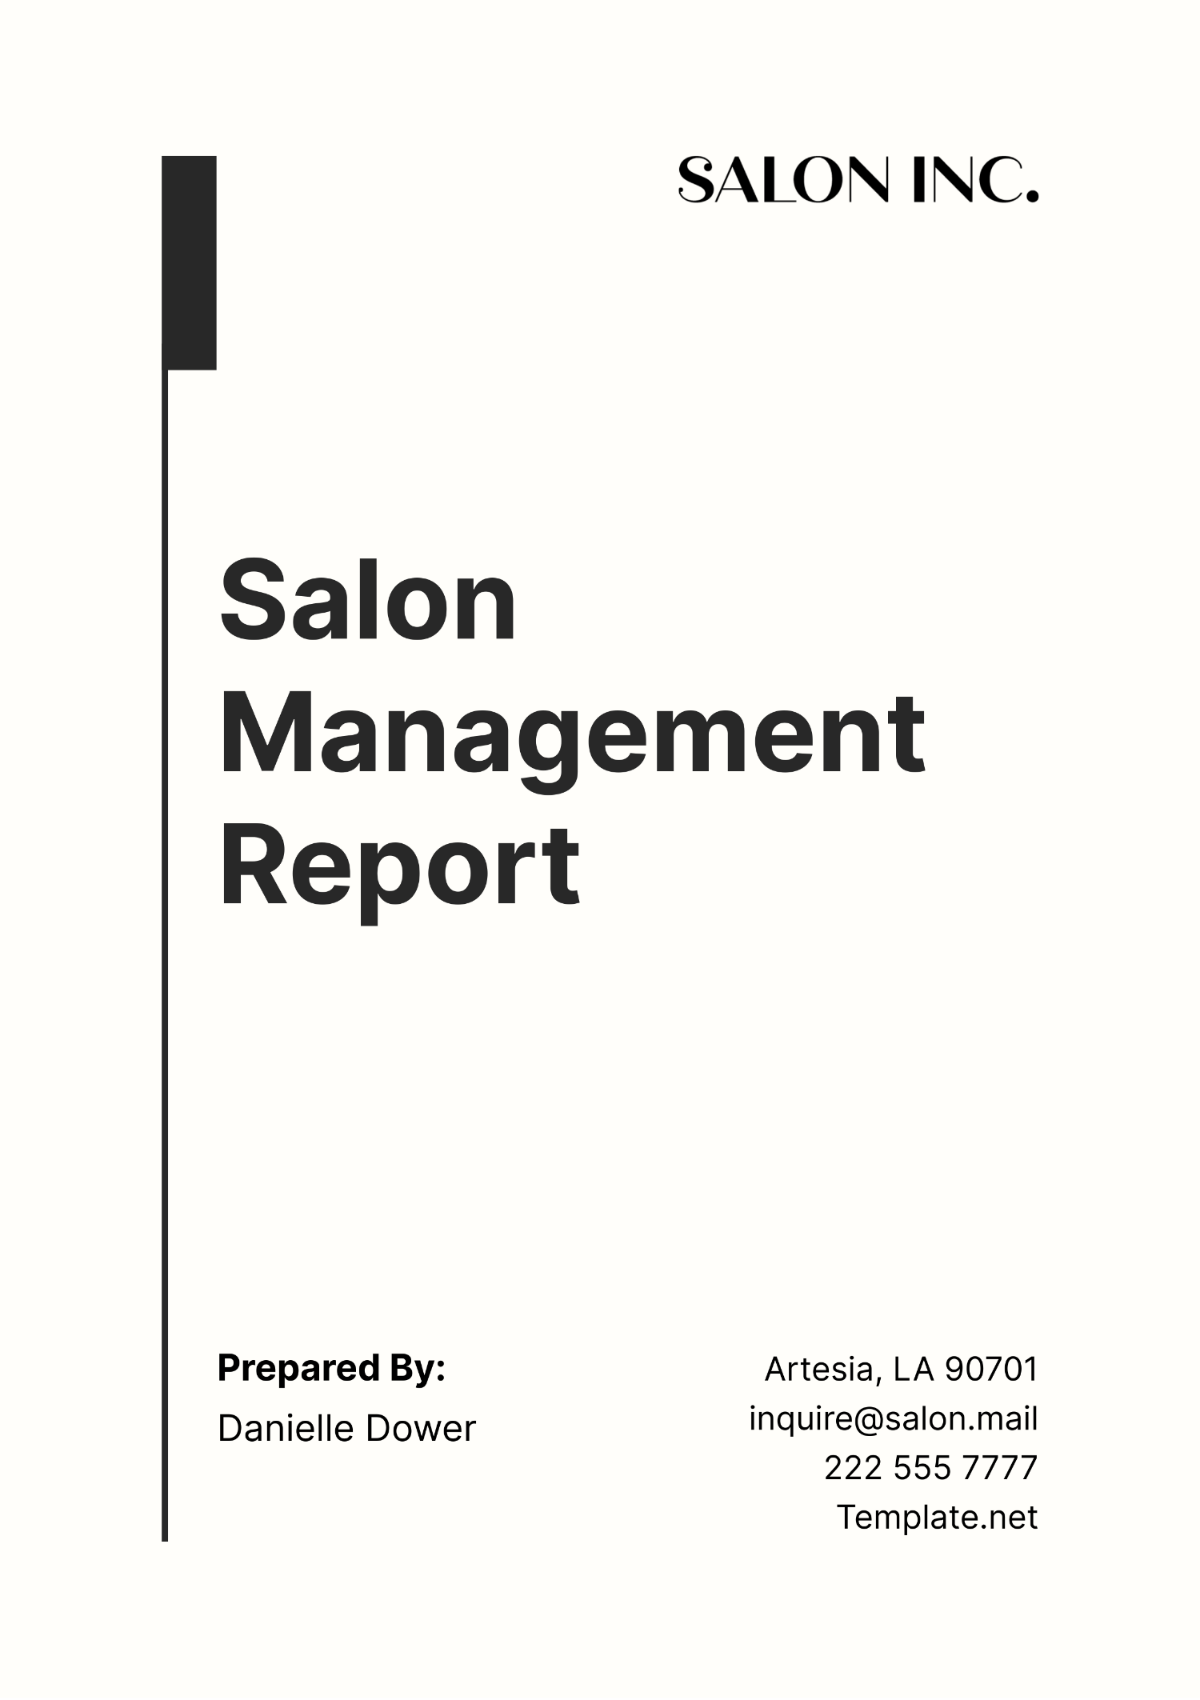 Salon Management Report Template